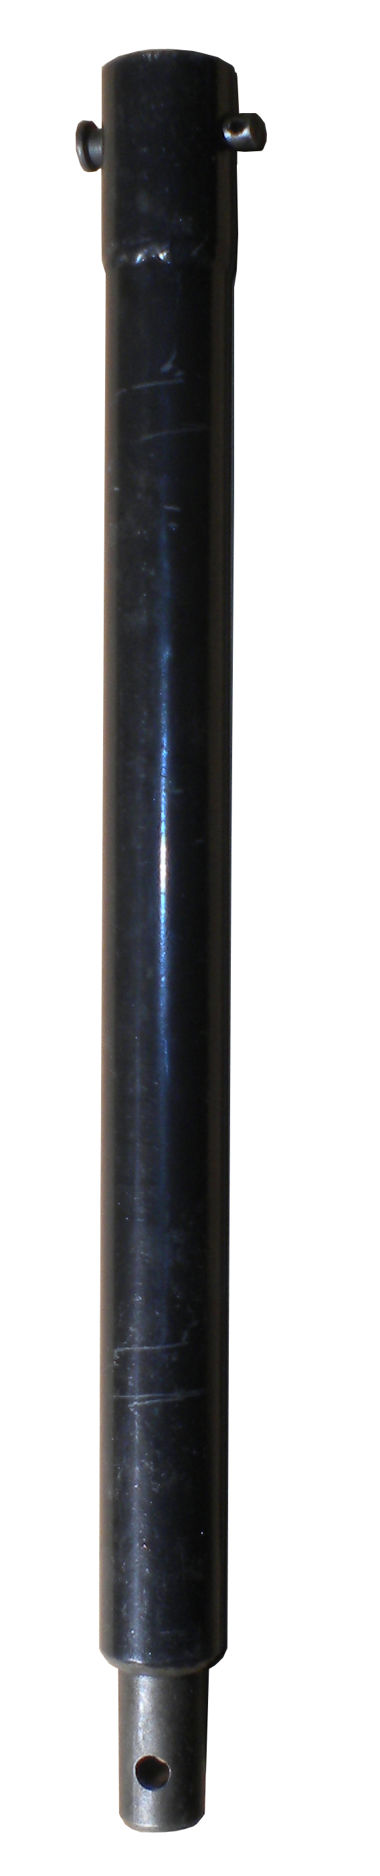 Drill extension 40cm / 